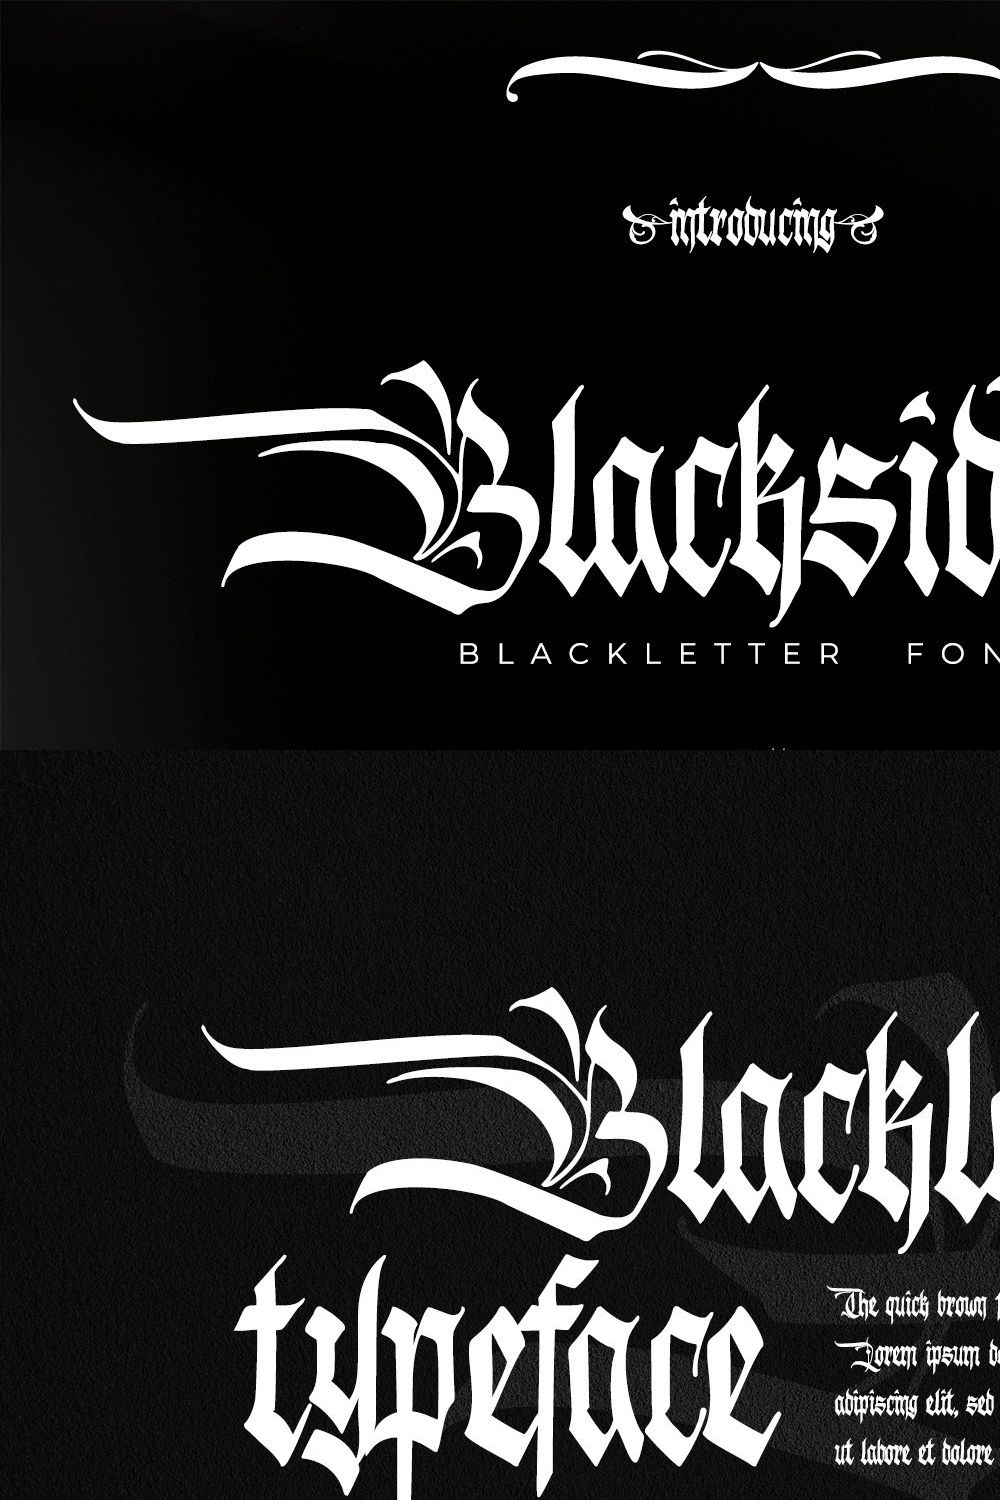 Blackside pinterest preview image.